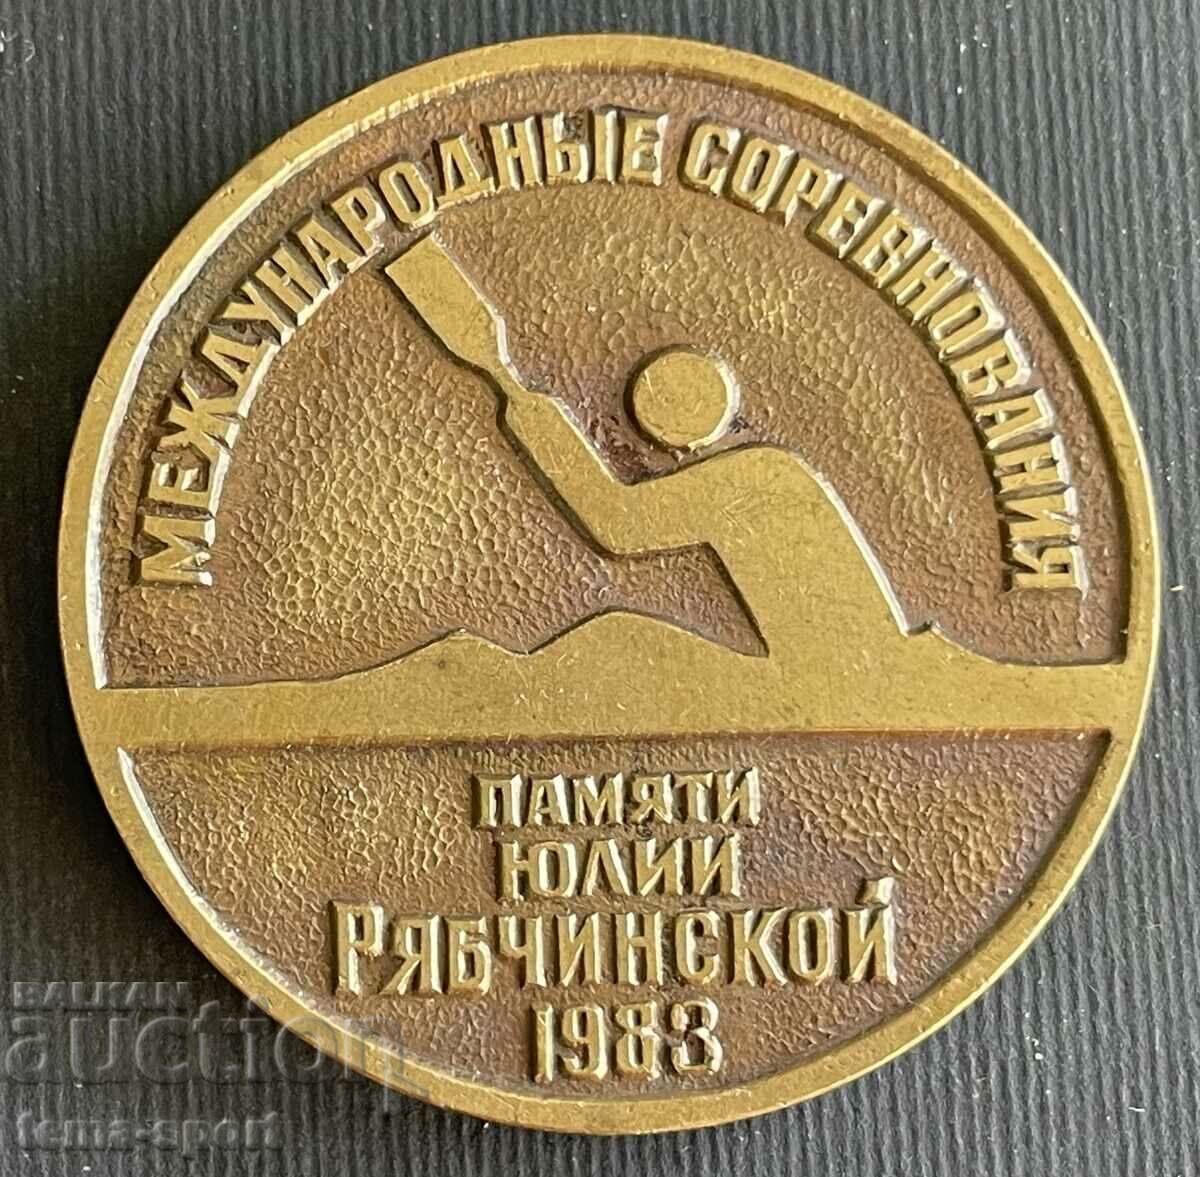 53 Bulgaria plaque Rowing Canoe Kayak Tournament 1983